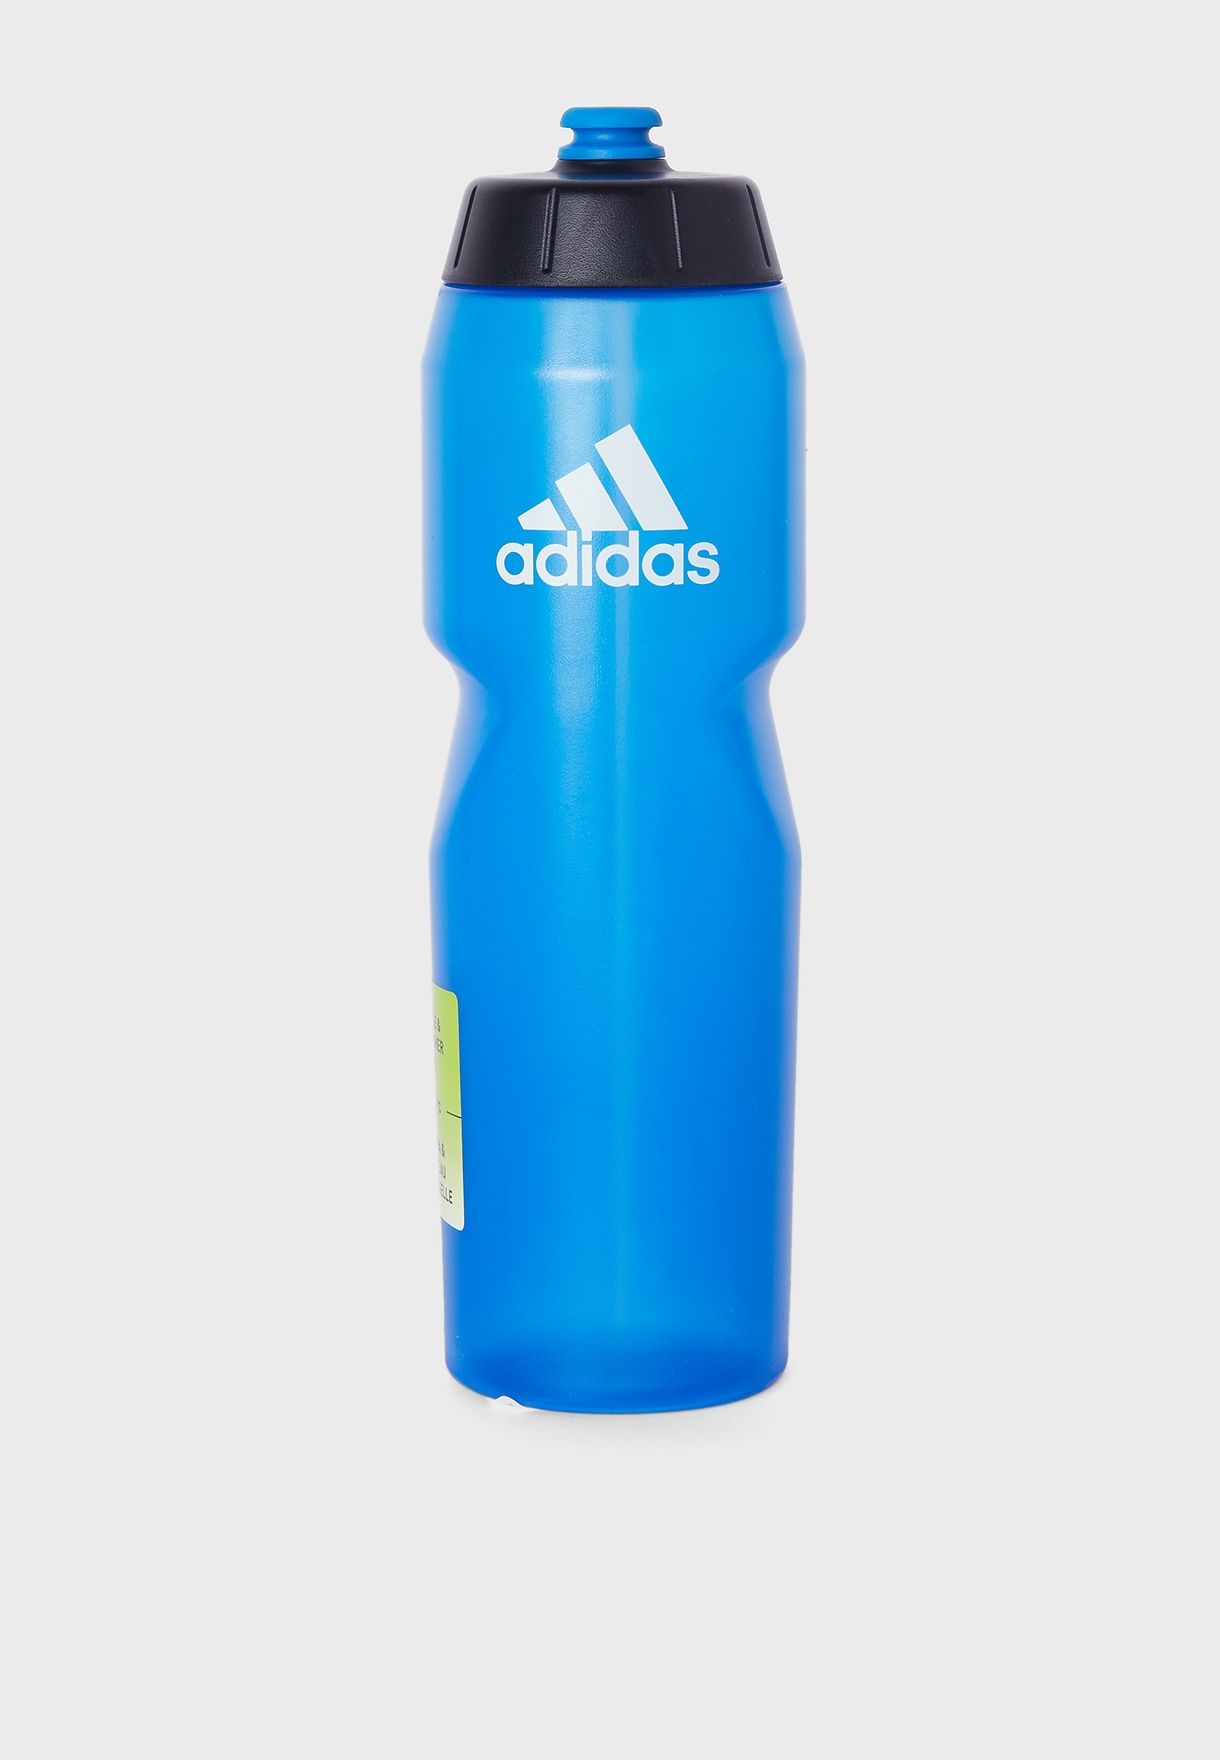 adidas perf bottle 750ml